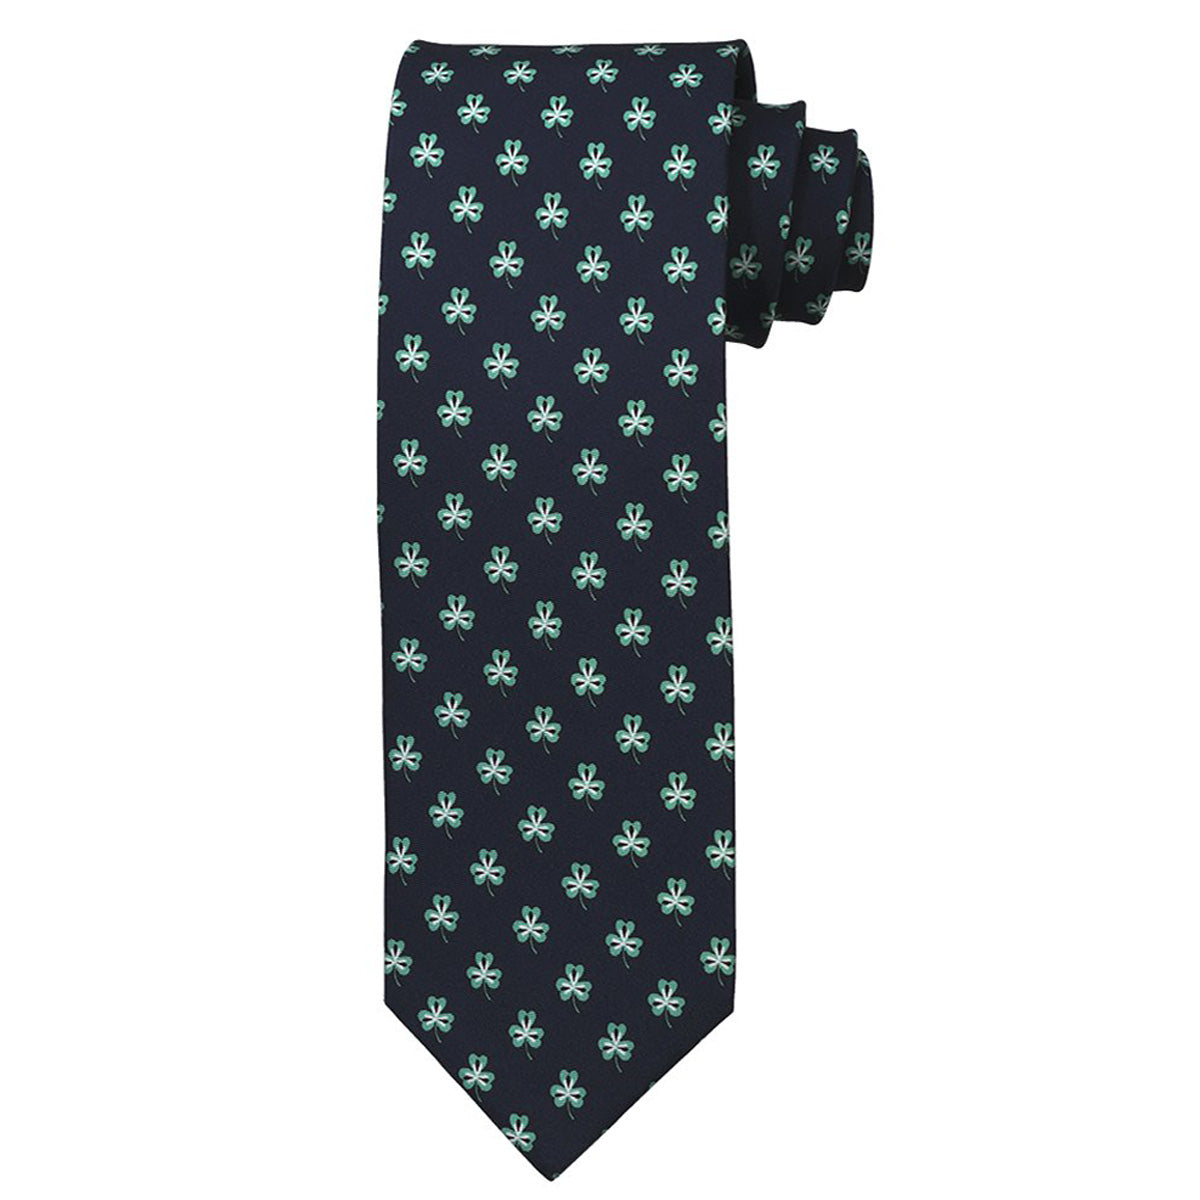 Essex Classics Men’s “Clover” Necktie